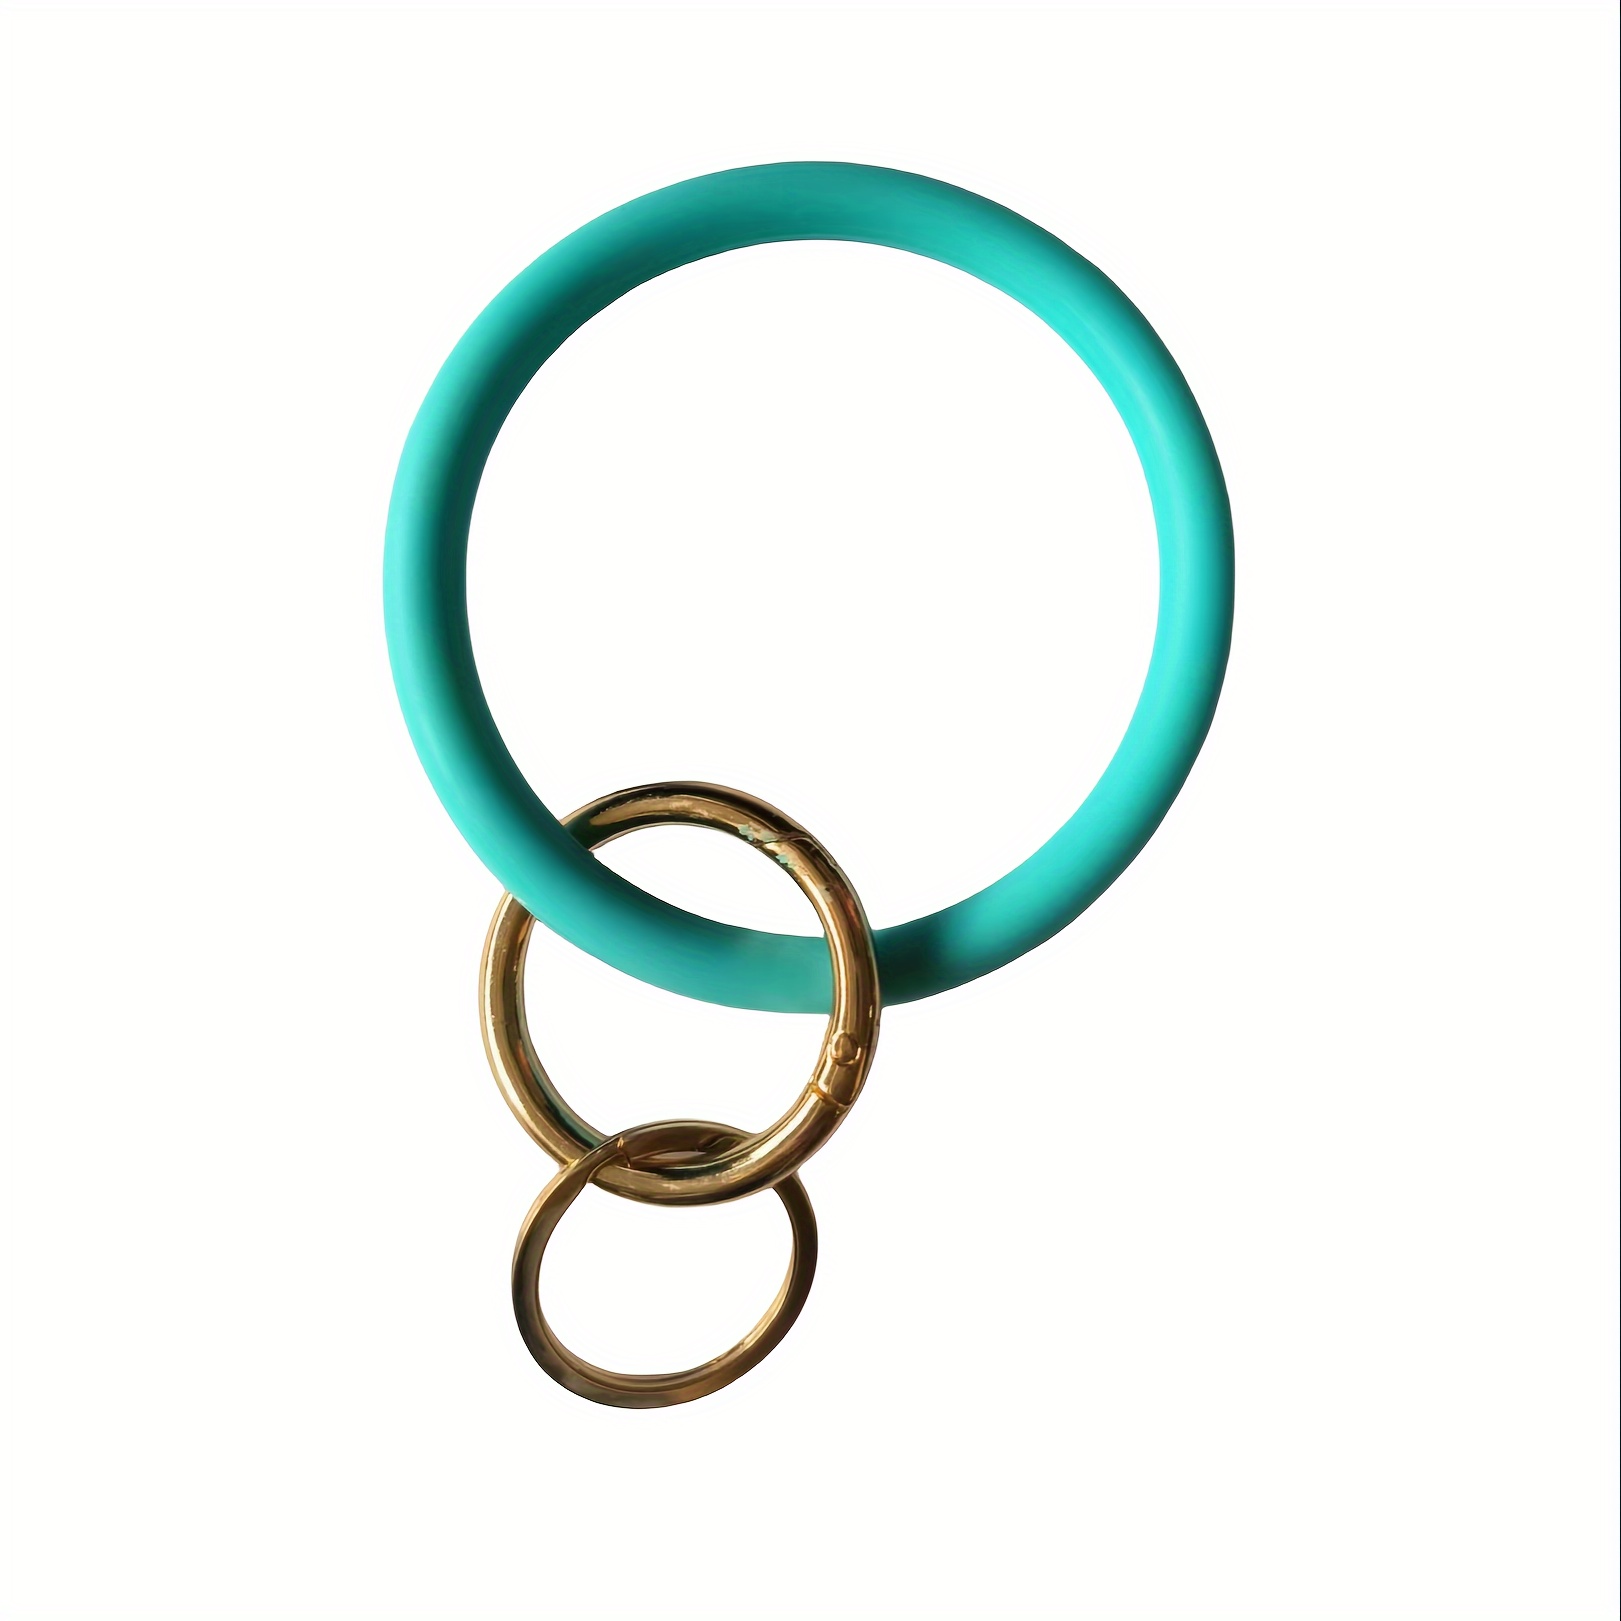 Silicone O Ring Keychain Circle Wristlet